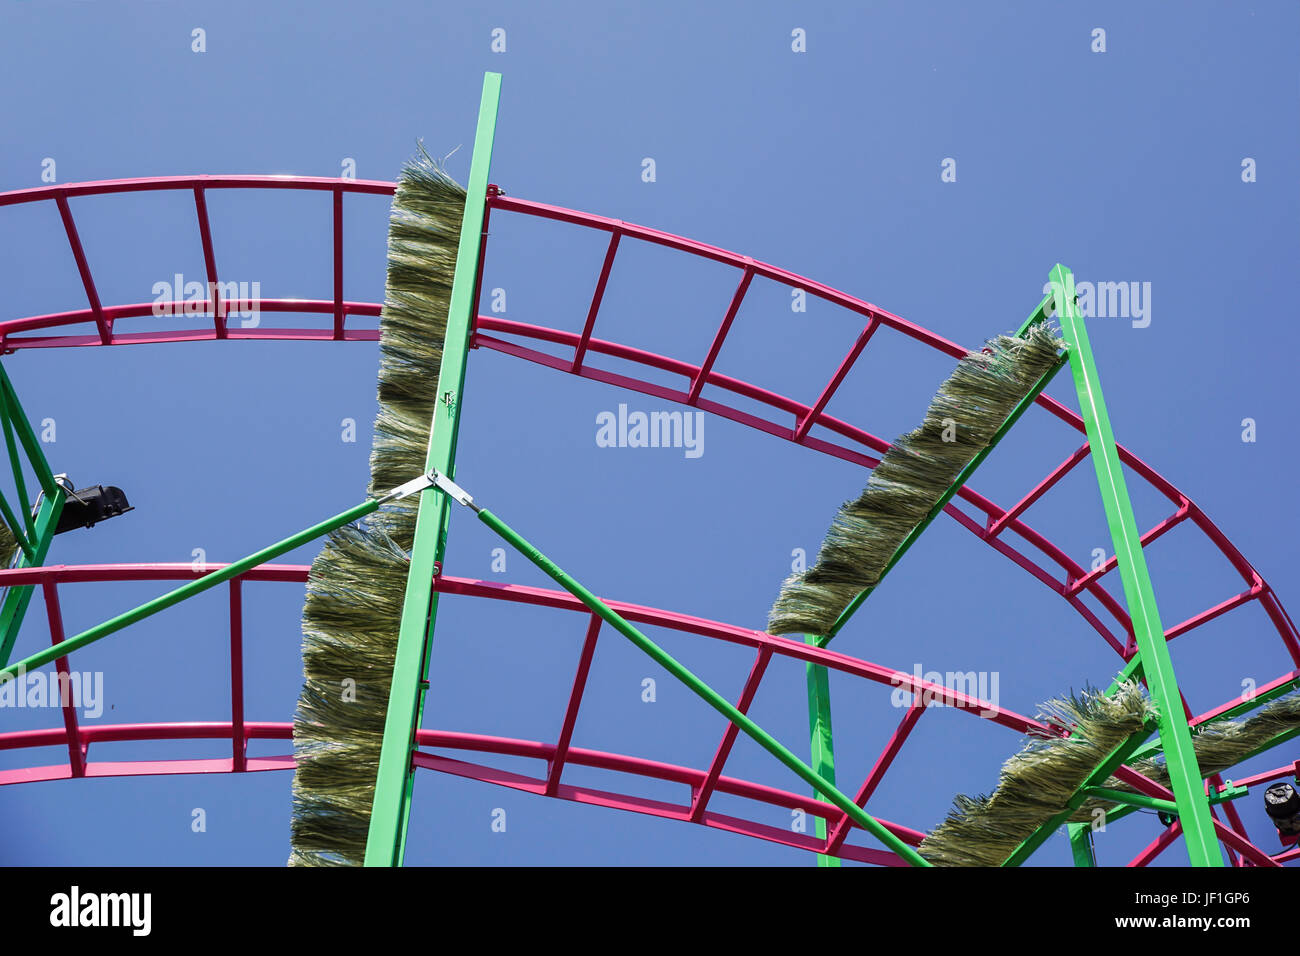 Rollercoaster track rail against a brilliant blue sky Stock Photo